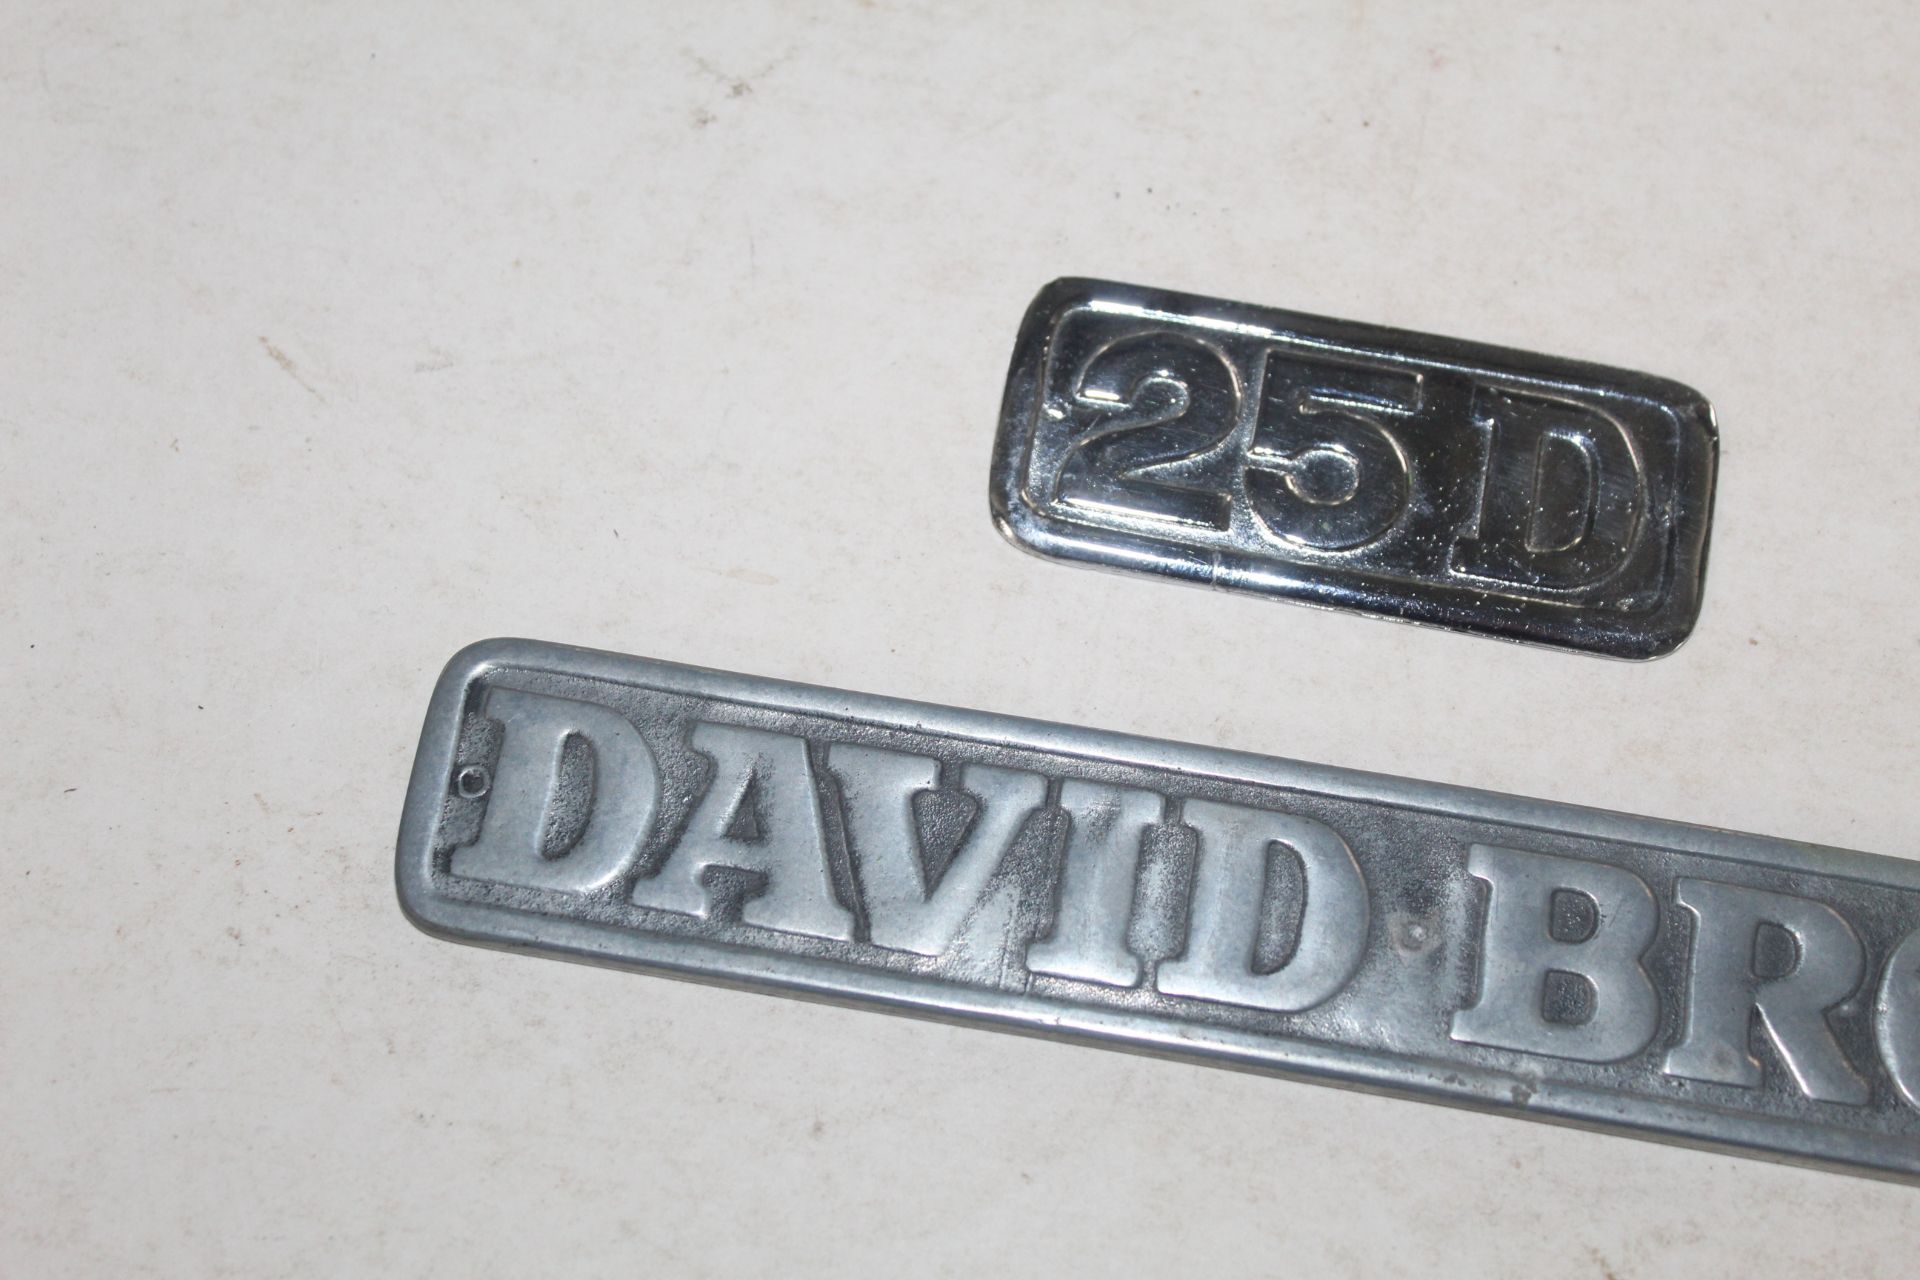 David Brown 25D Tractor Badges. - Image 2 of 3